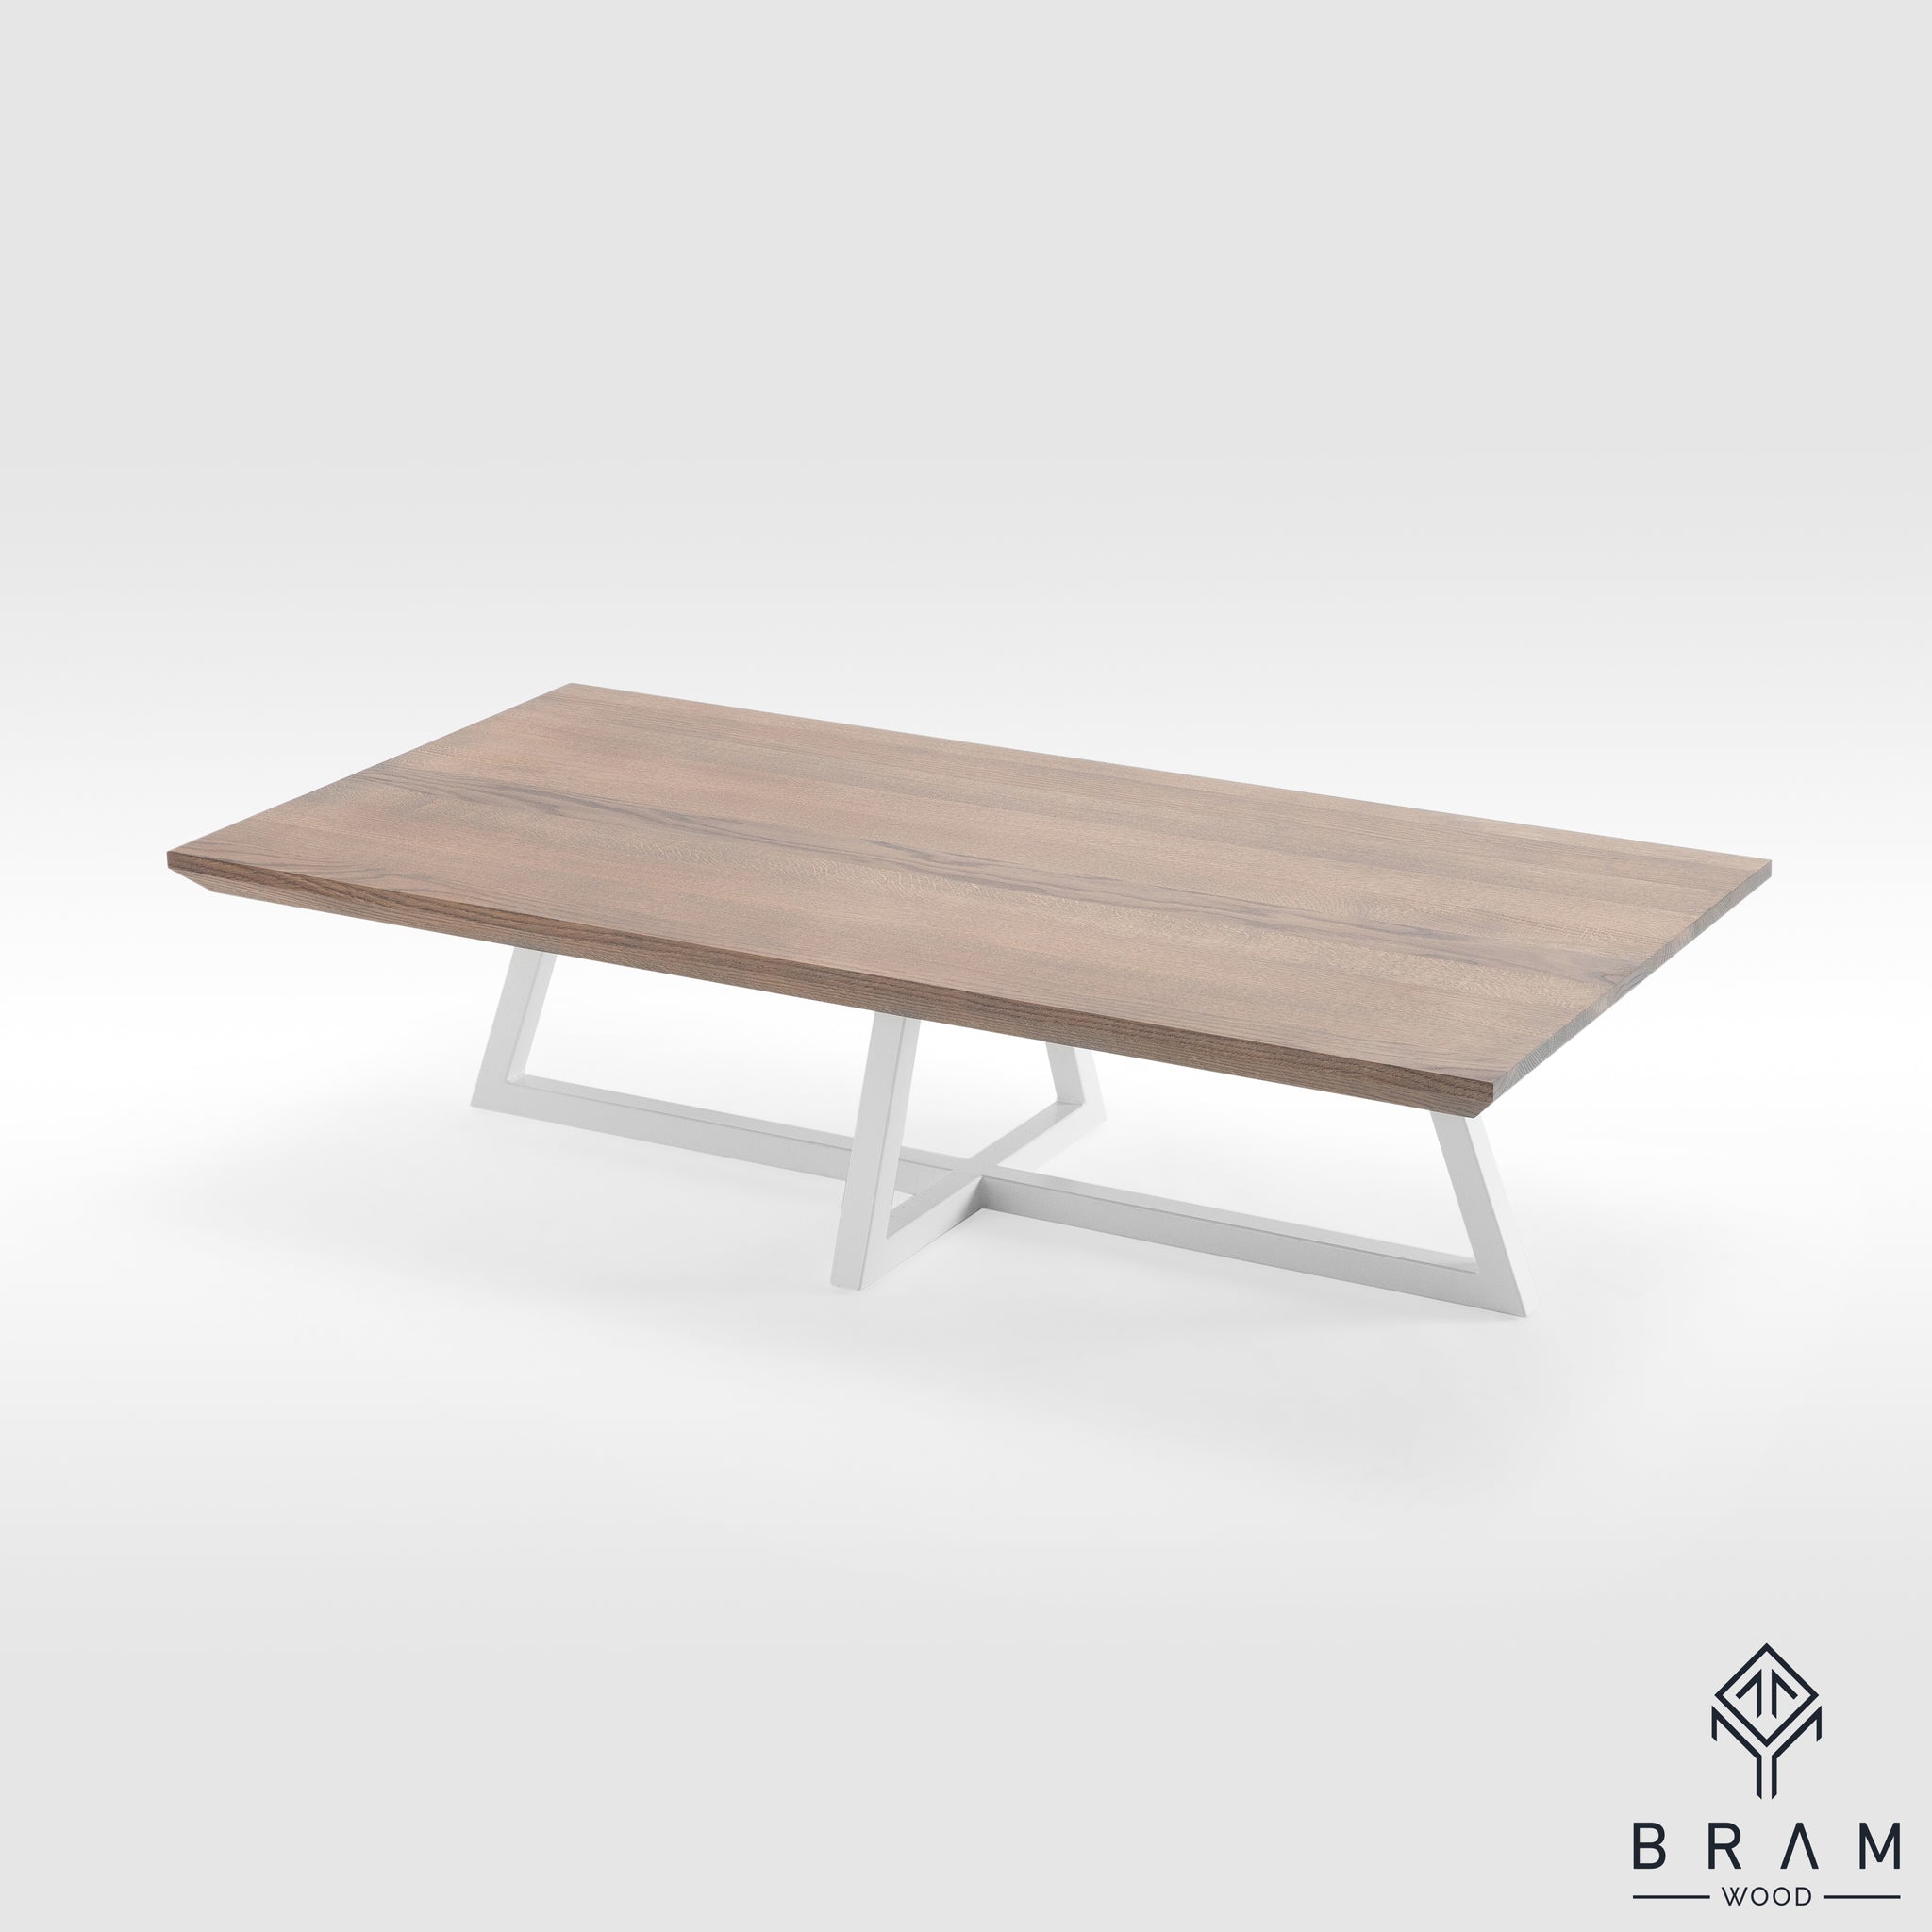 Unique Coffee Table With Angled Steel Legs Bram Wood Bram Wood